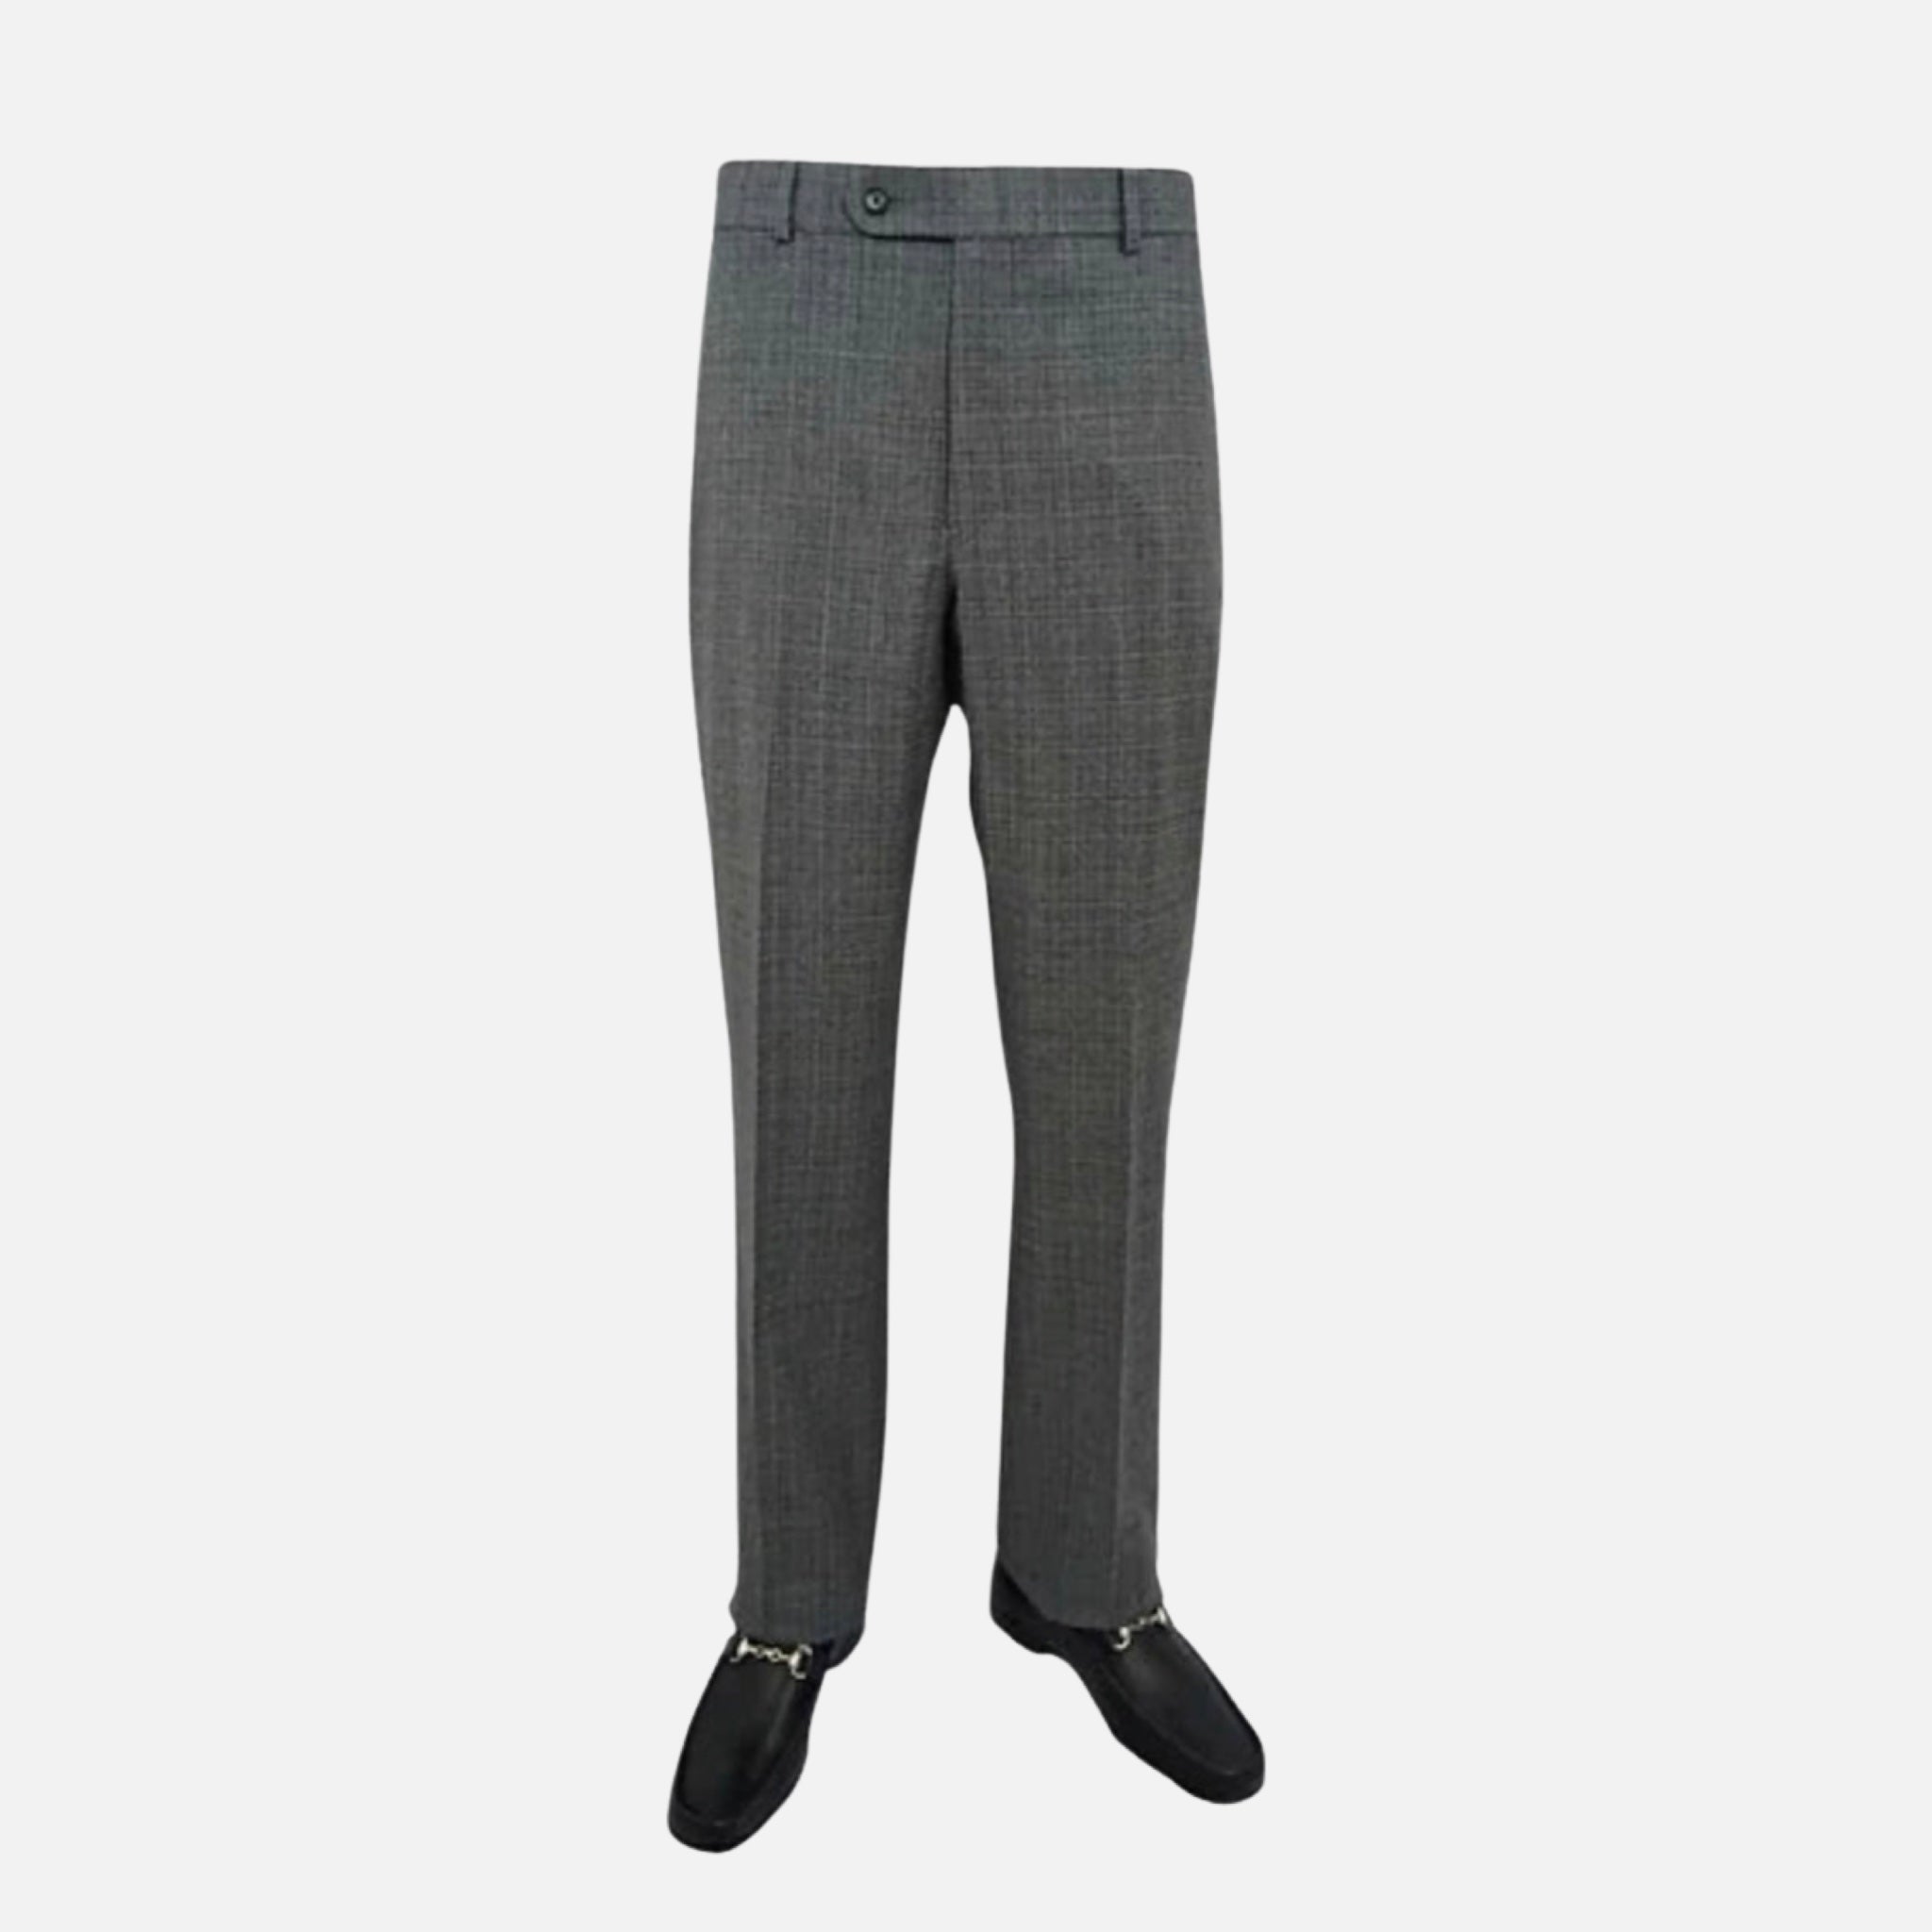 Wool flat front gray dress pants for men by Ballin